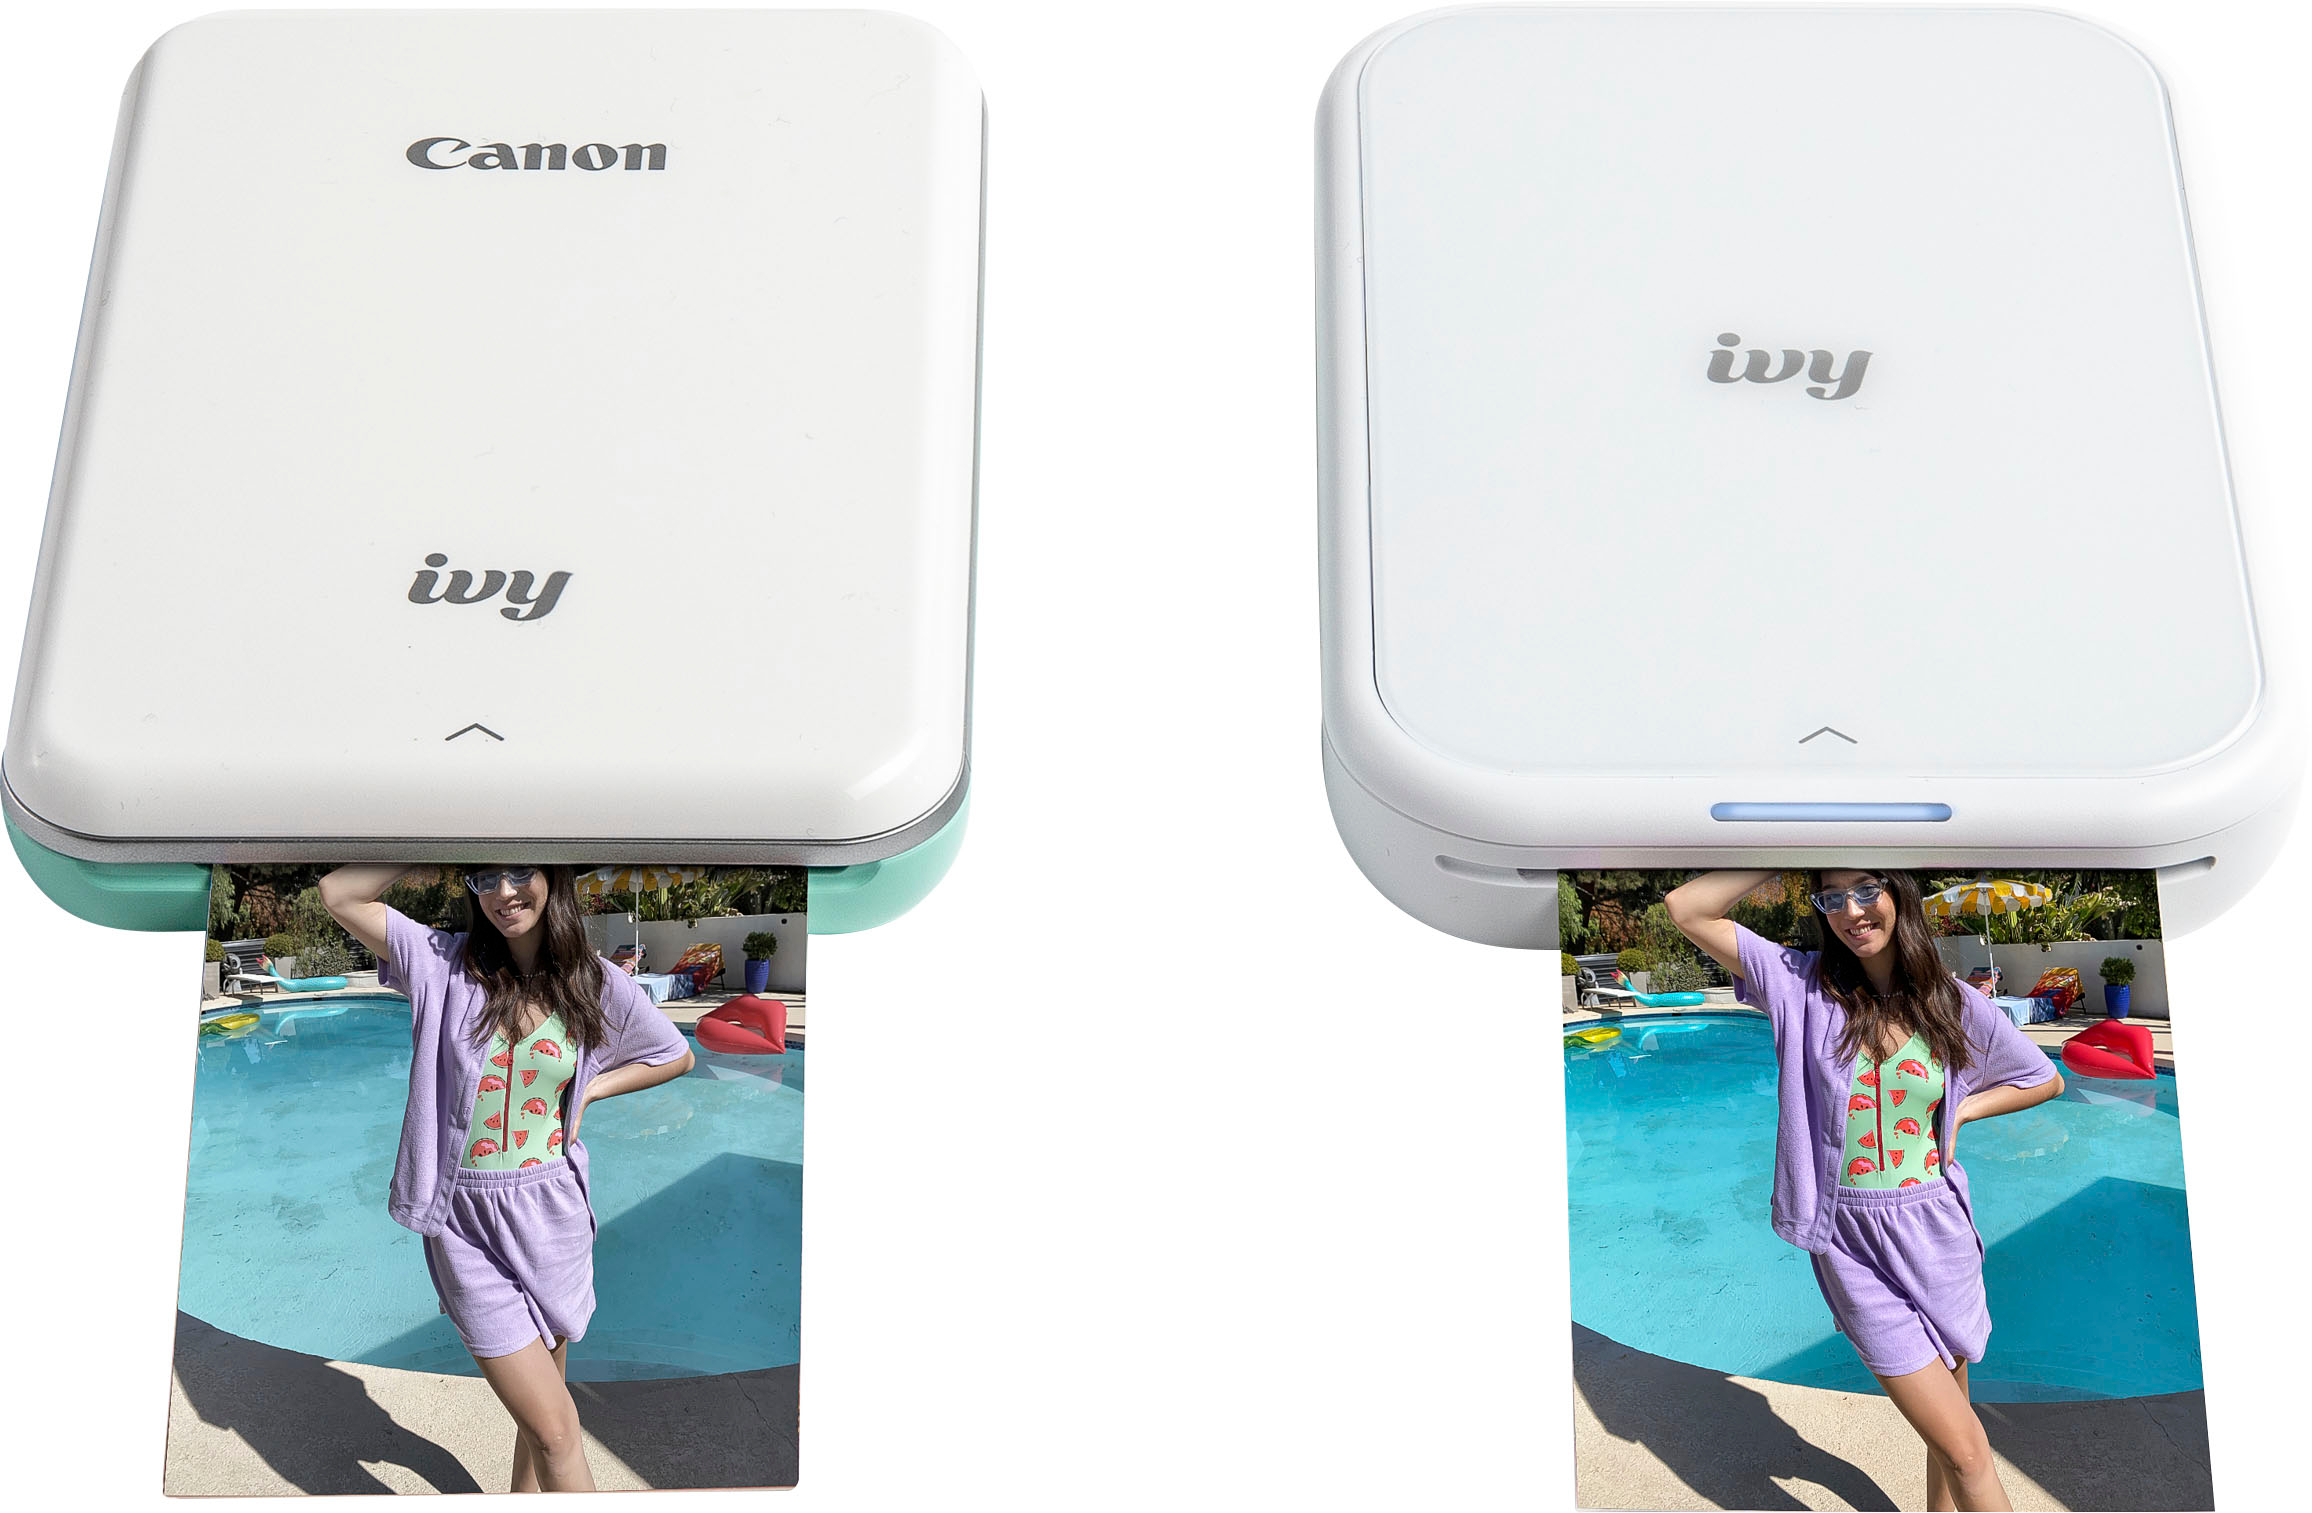 Canon Ivy Mini Photo Printer Made for iPhone iPad Includes USB